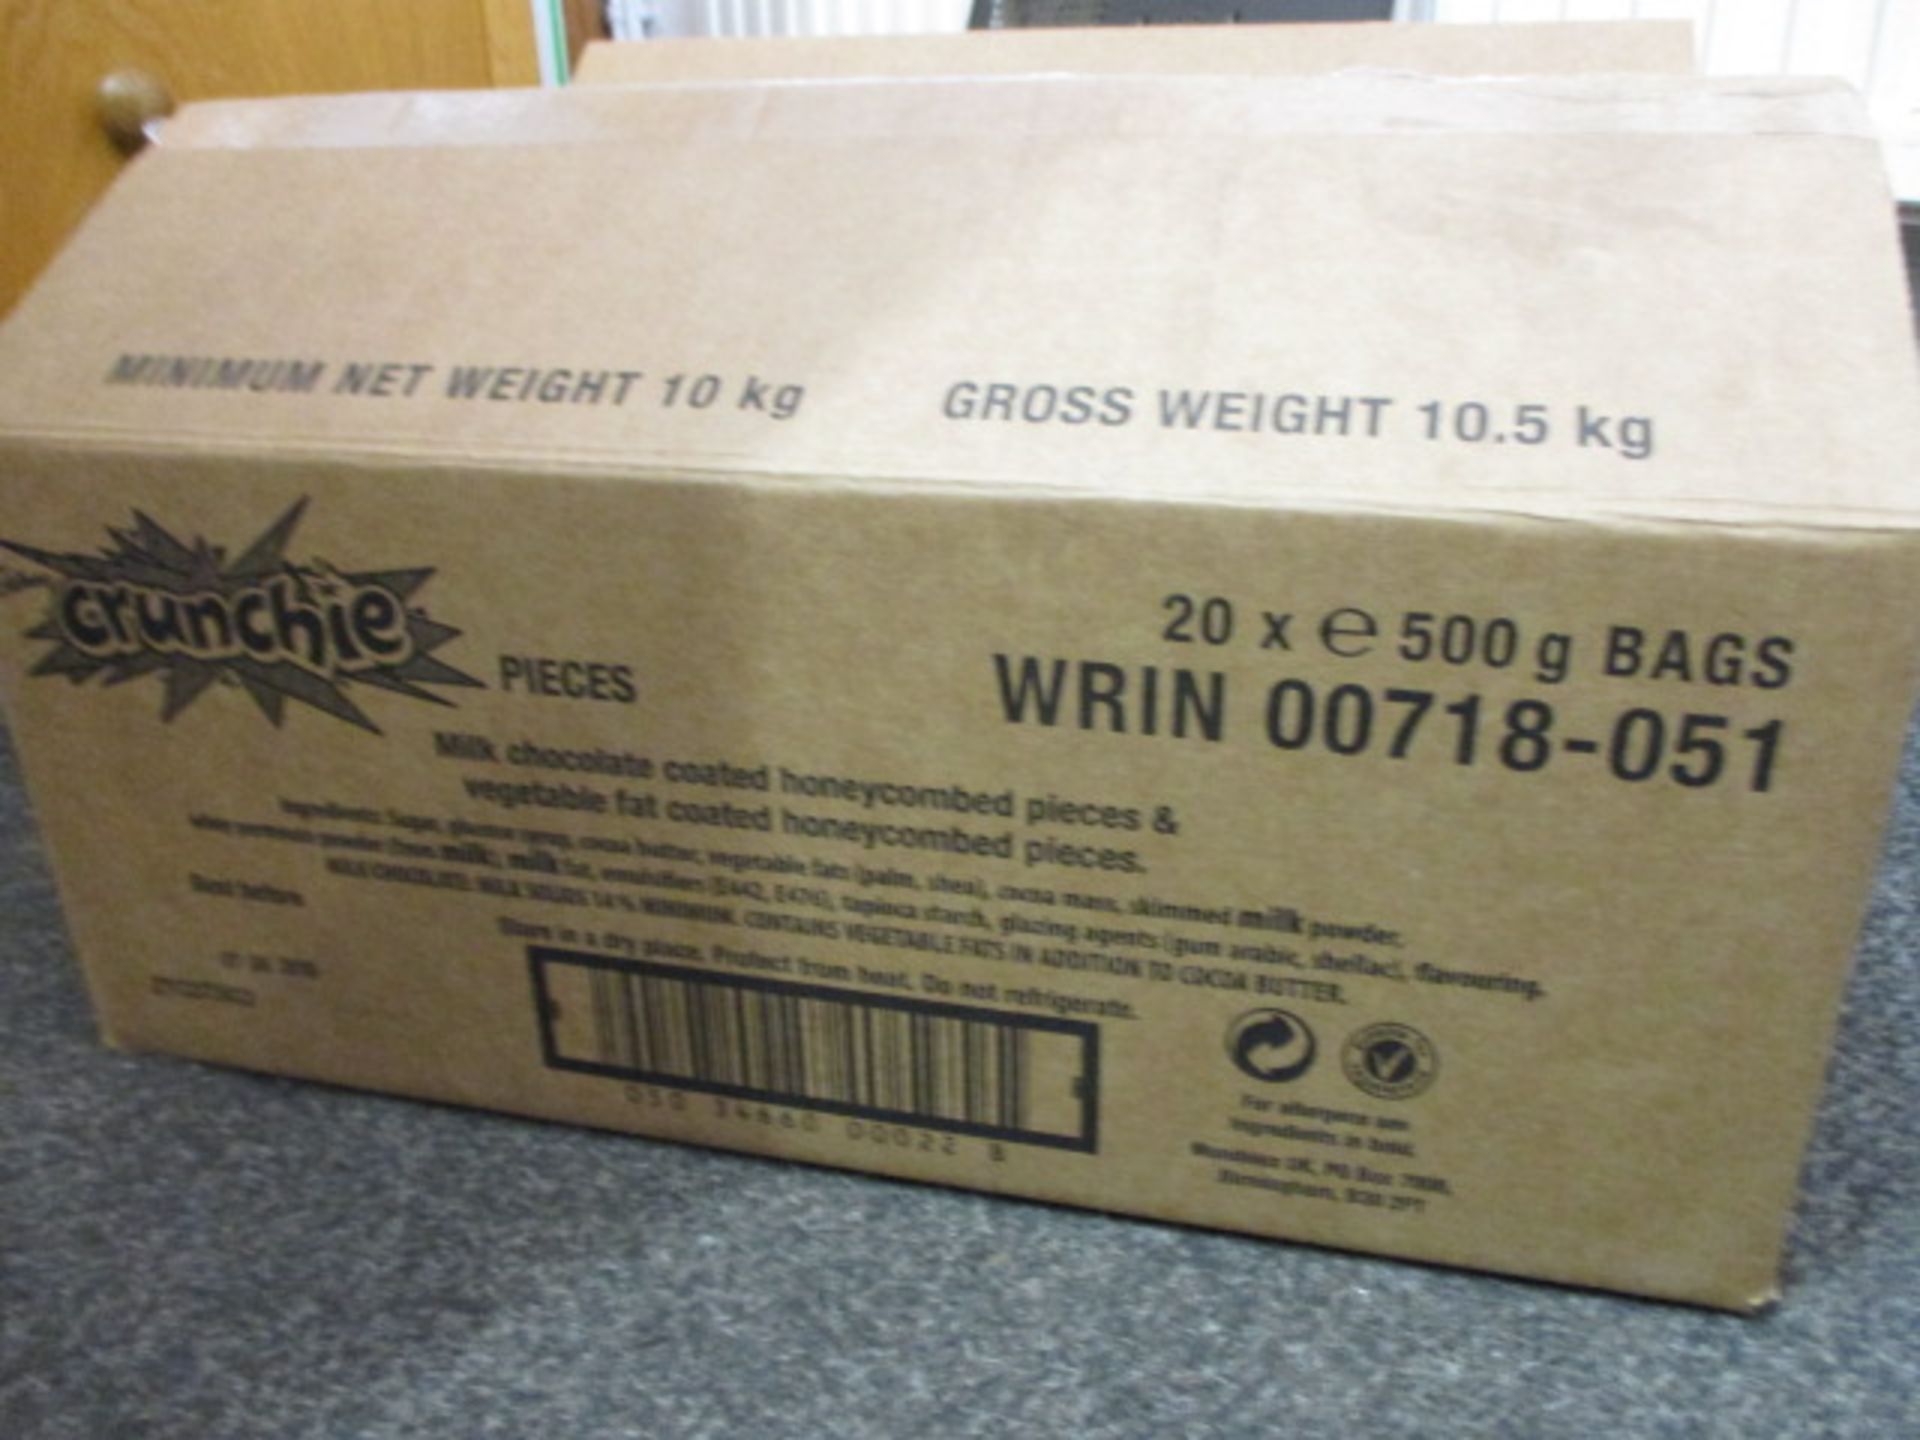 Box containing 20 x 500g bags of Cadbury Crunchie Pieces, milk chocolate and honeycomb